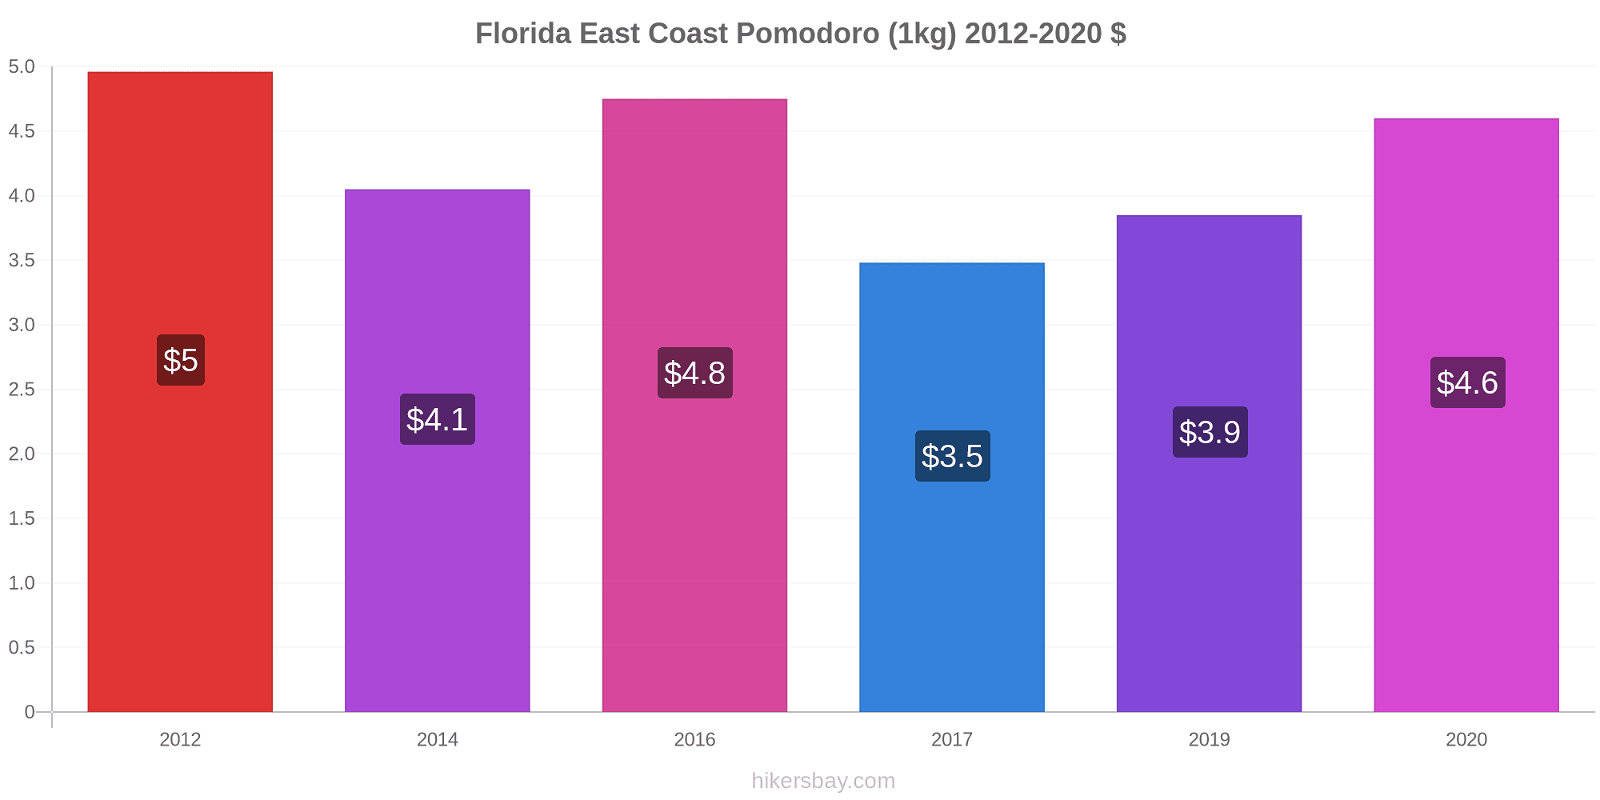 Florida East Coast variazioni di prezzo Pomodoro (1kg) hikersbay.com